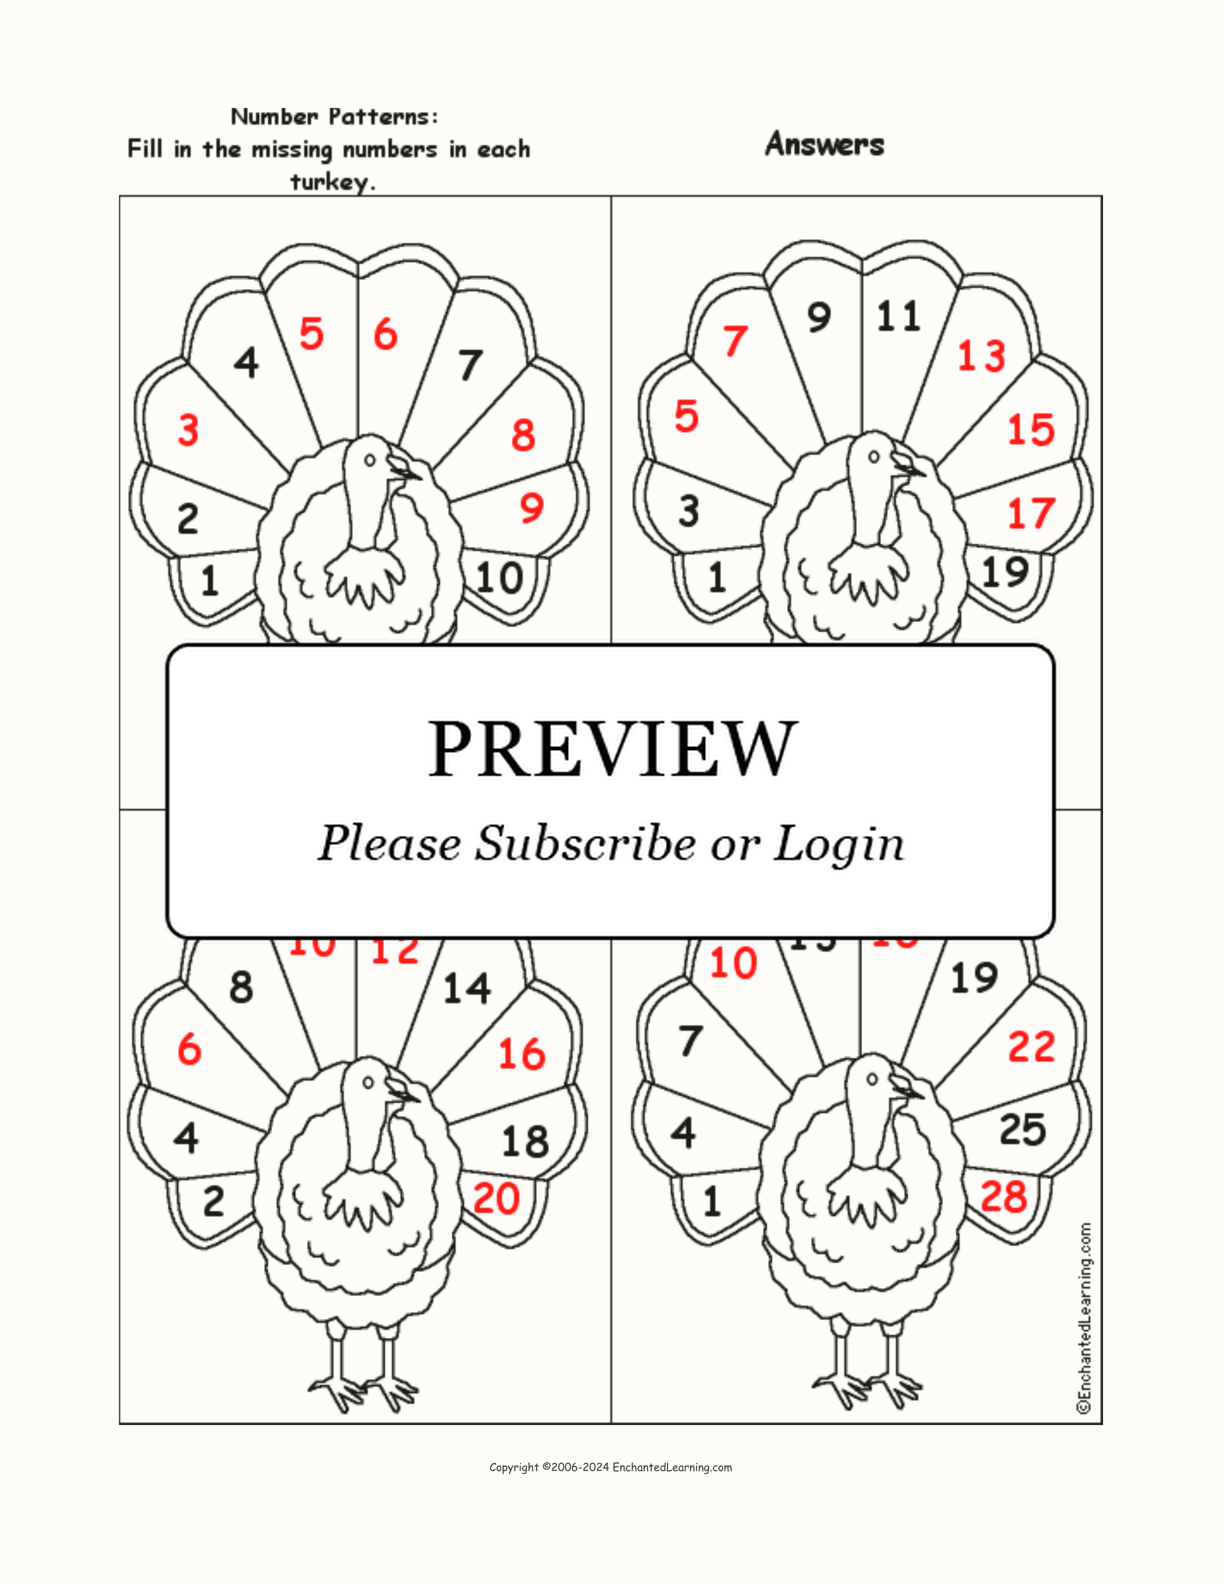 Turkey Number Patterns #1 interactive worksheet page 2